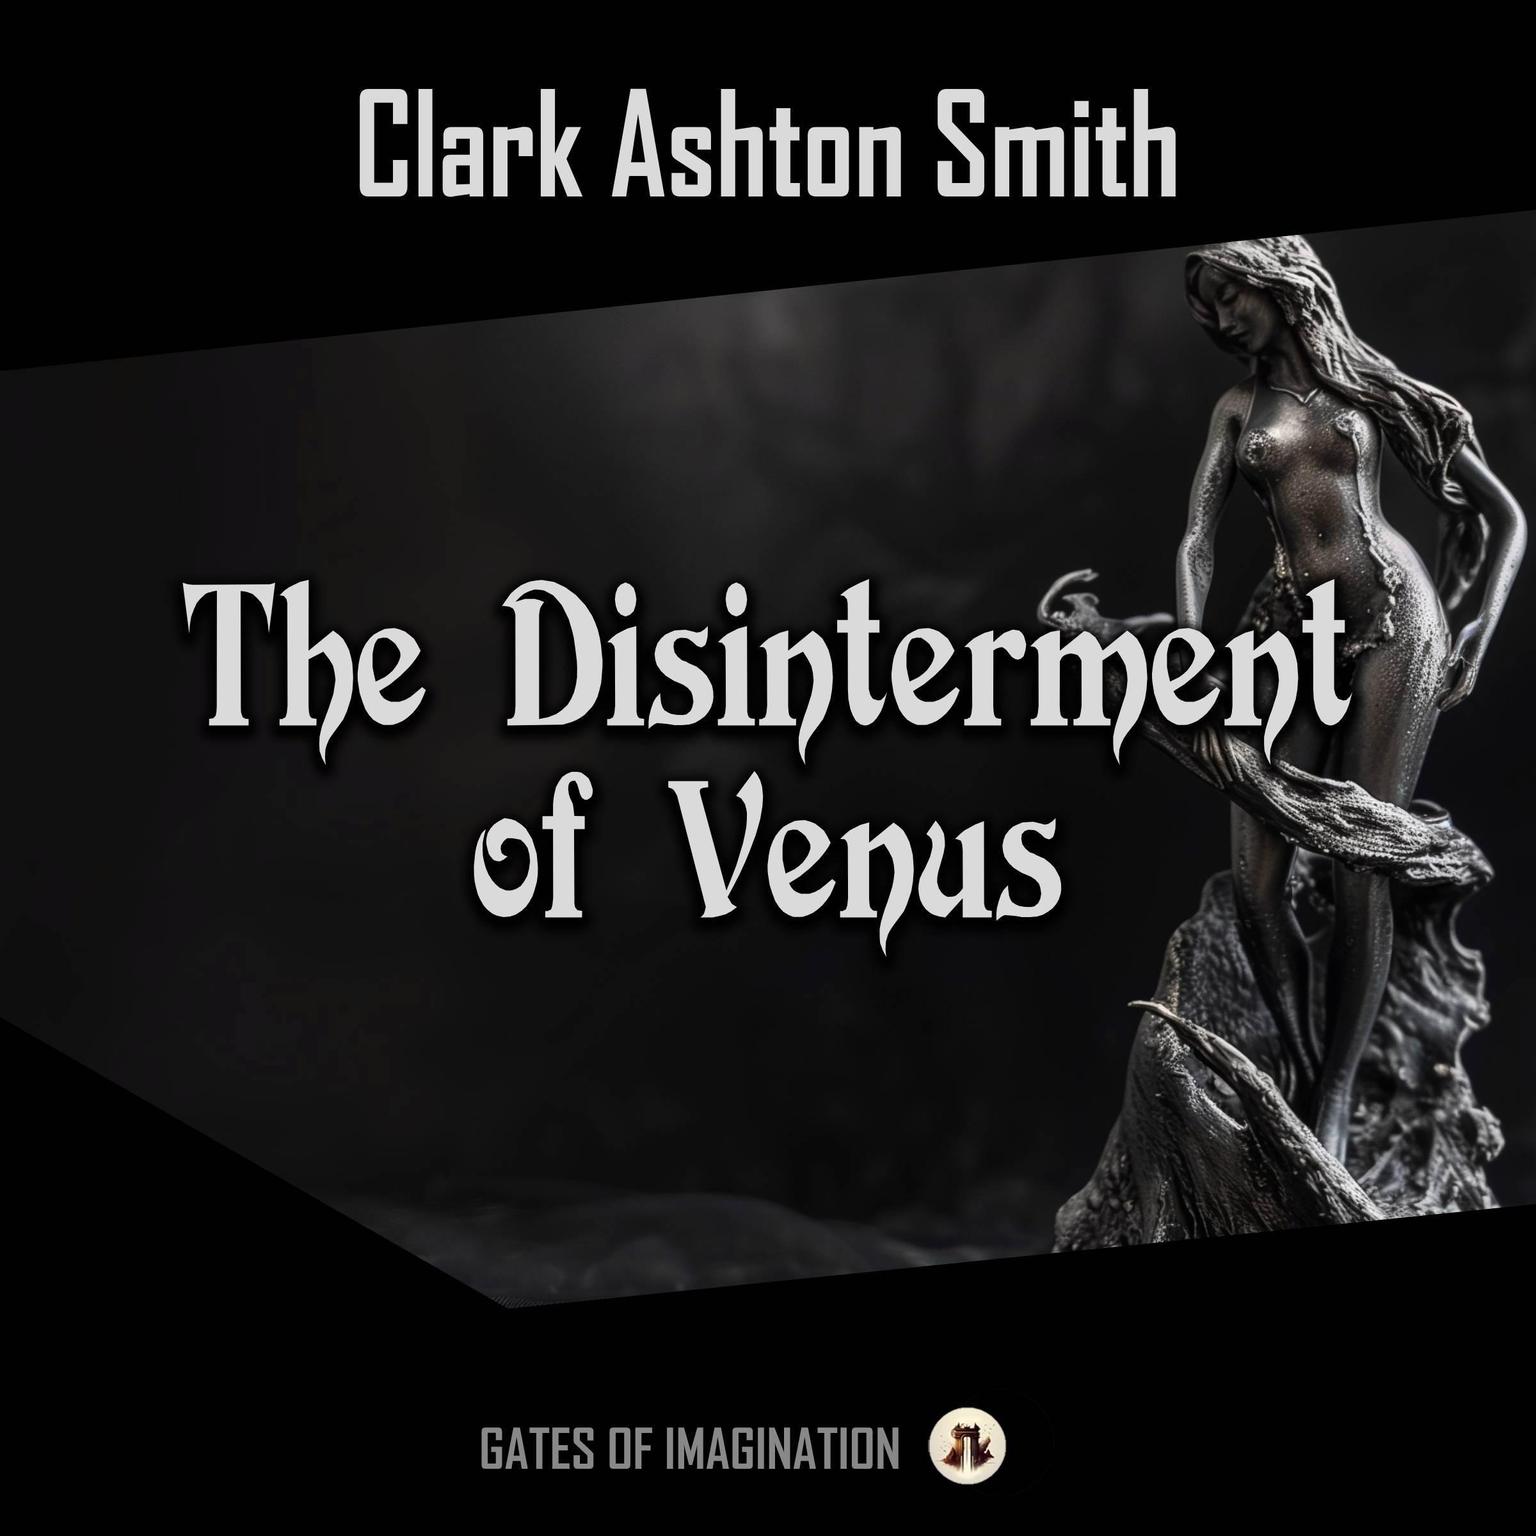 The Disinterment of Venus Audiobook, by Clark Ashton Smith